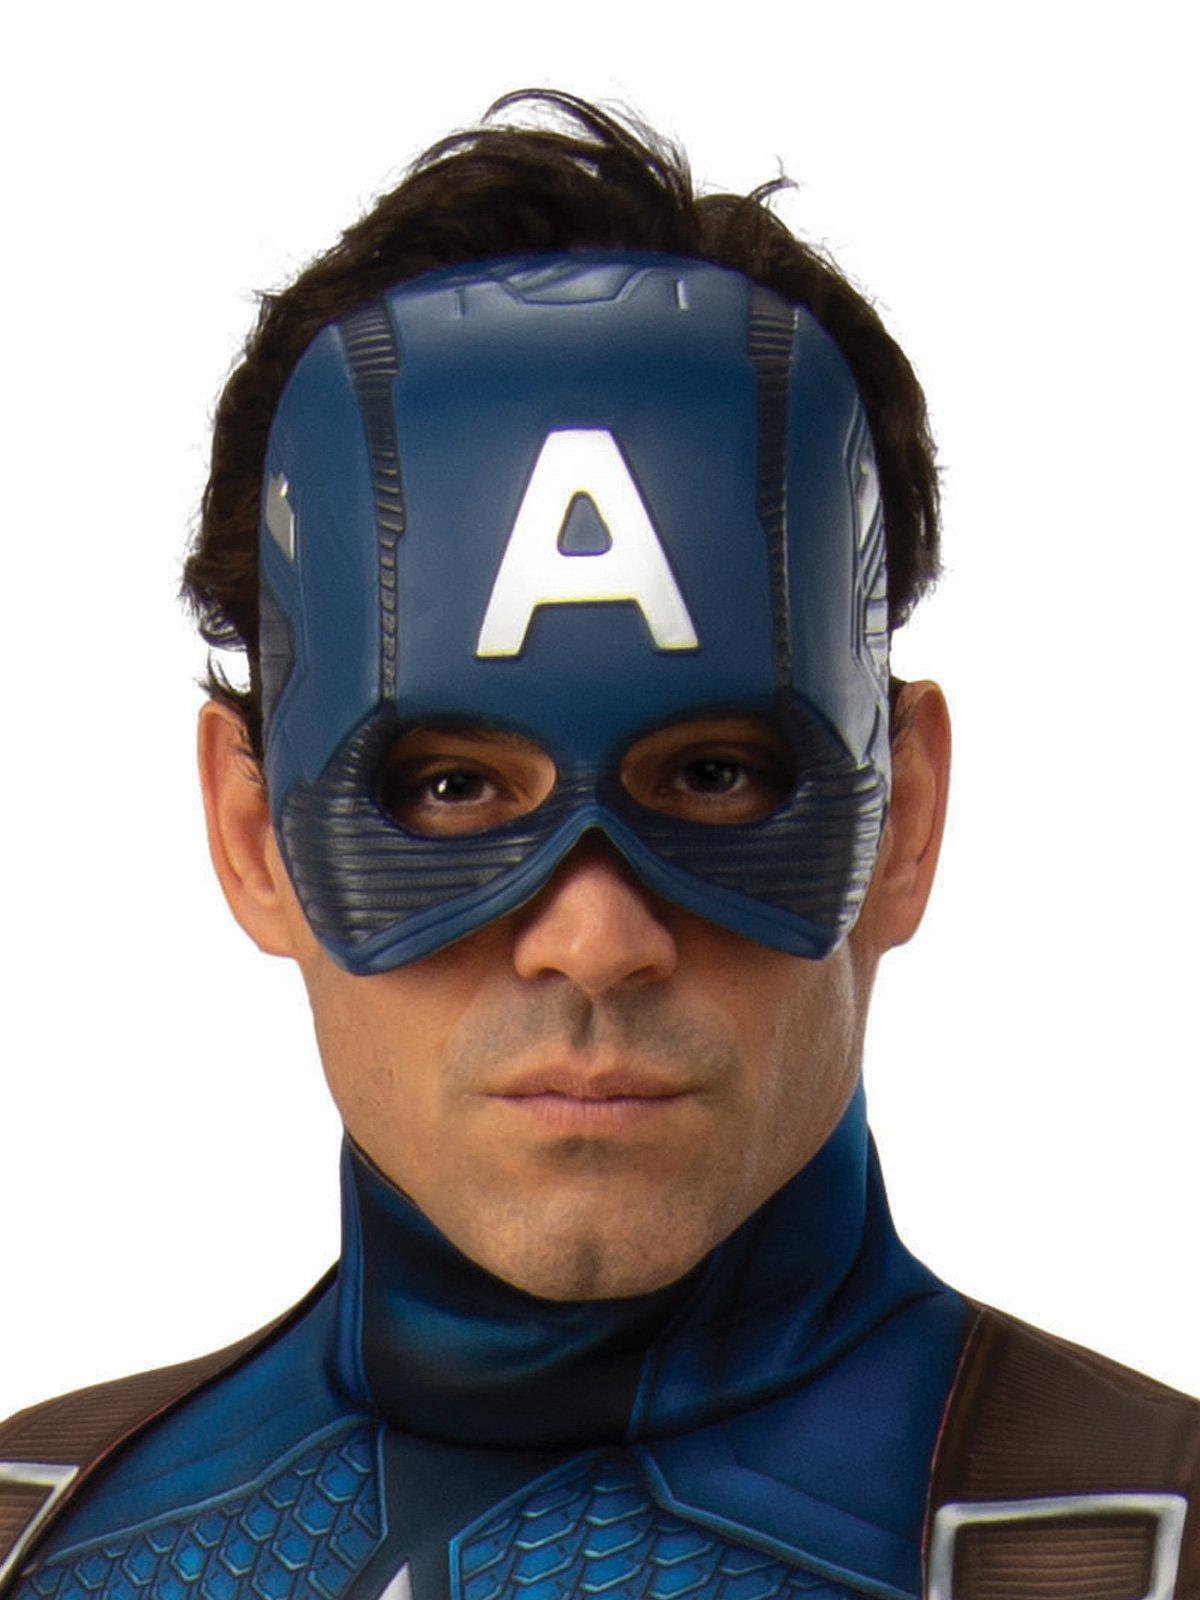 Captain America Deluxe Costume Adult